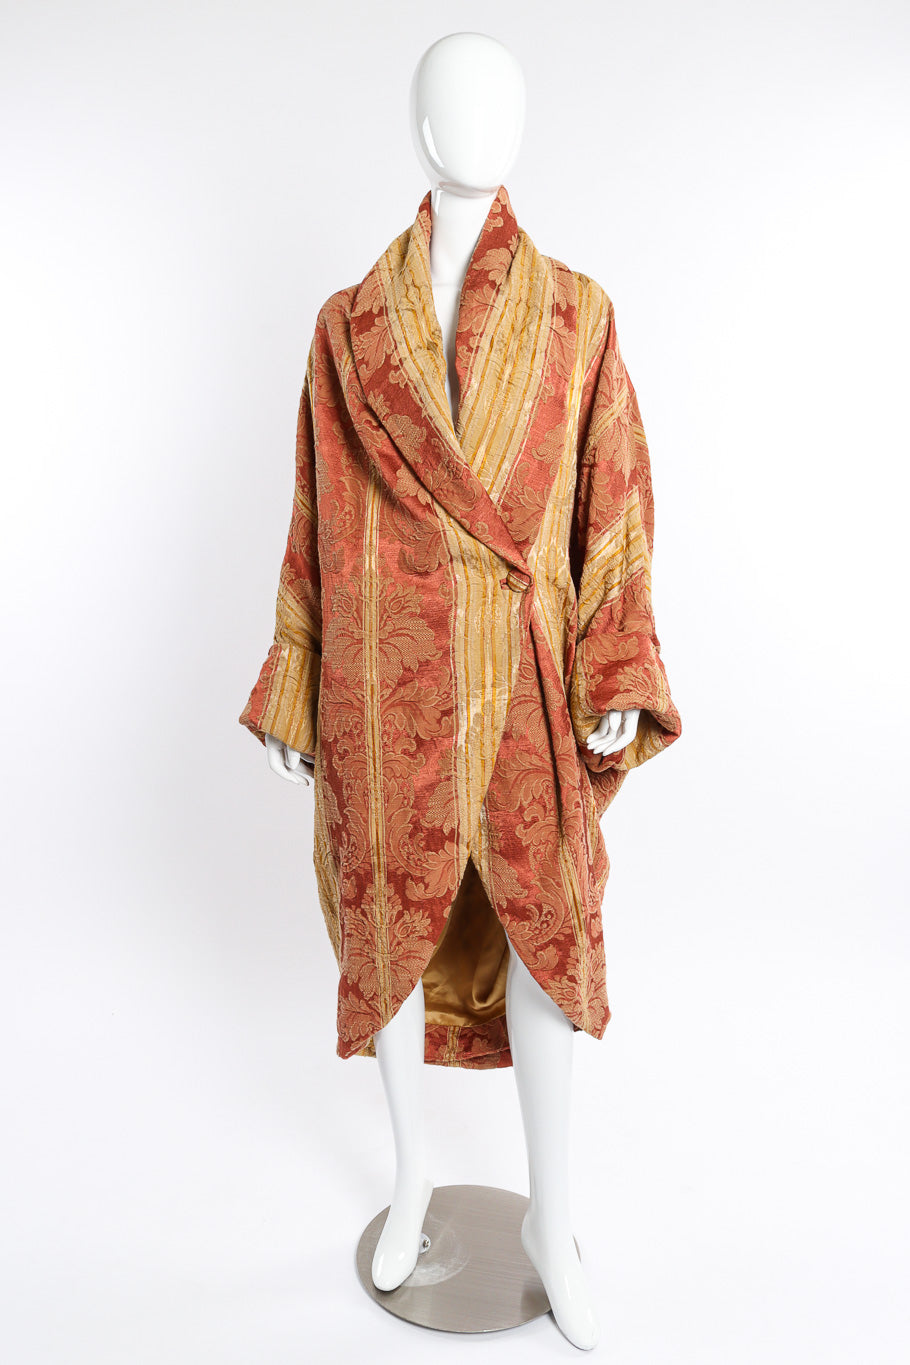 Vintage Les Habitudes Draped Brocade Cocoon Coat front on mannequin @recessla